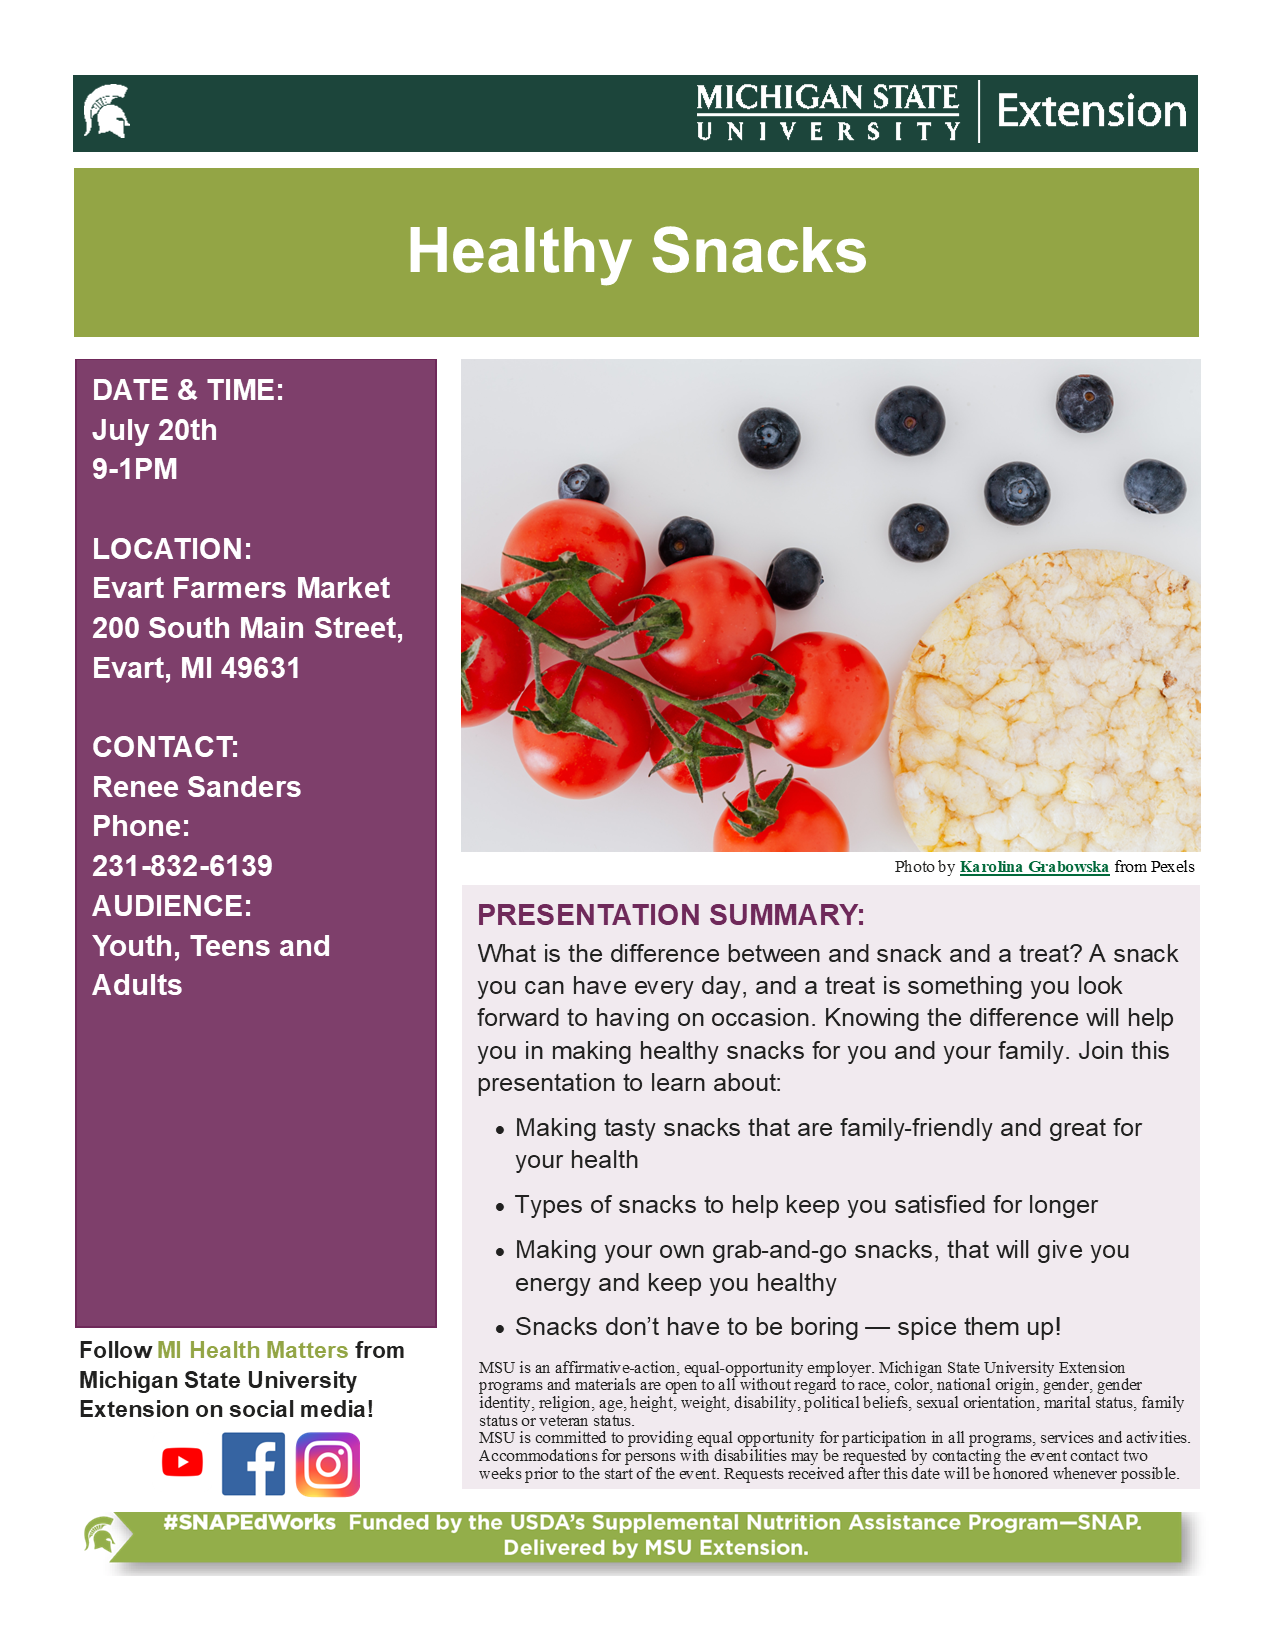 HealthySnacks-SNAP-Ed flyer.png